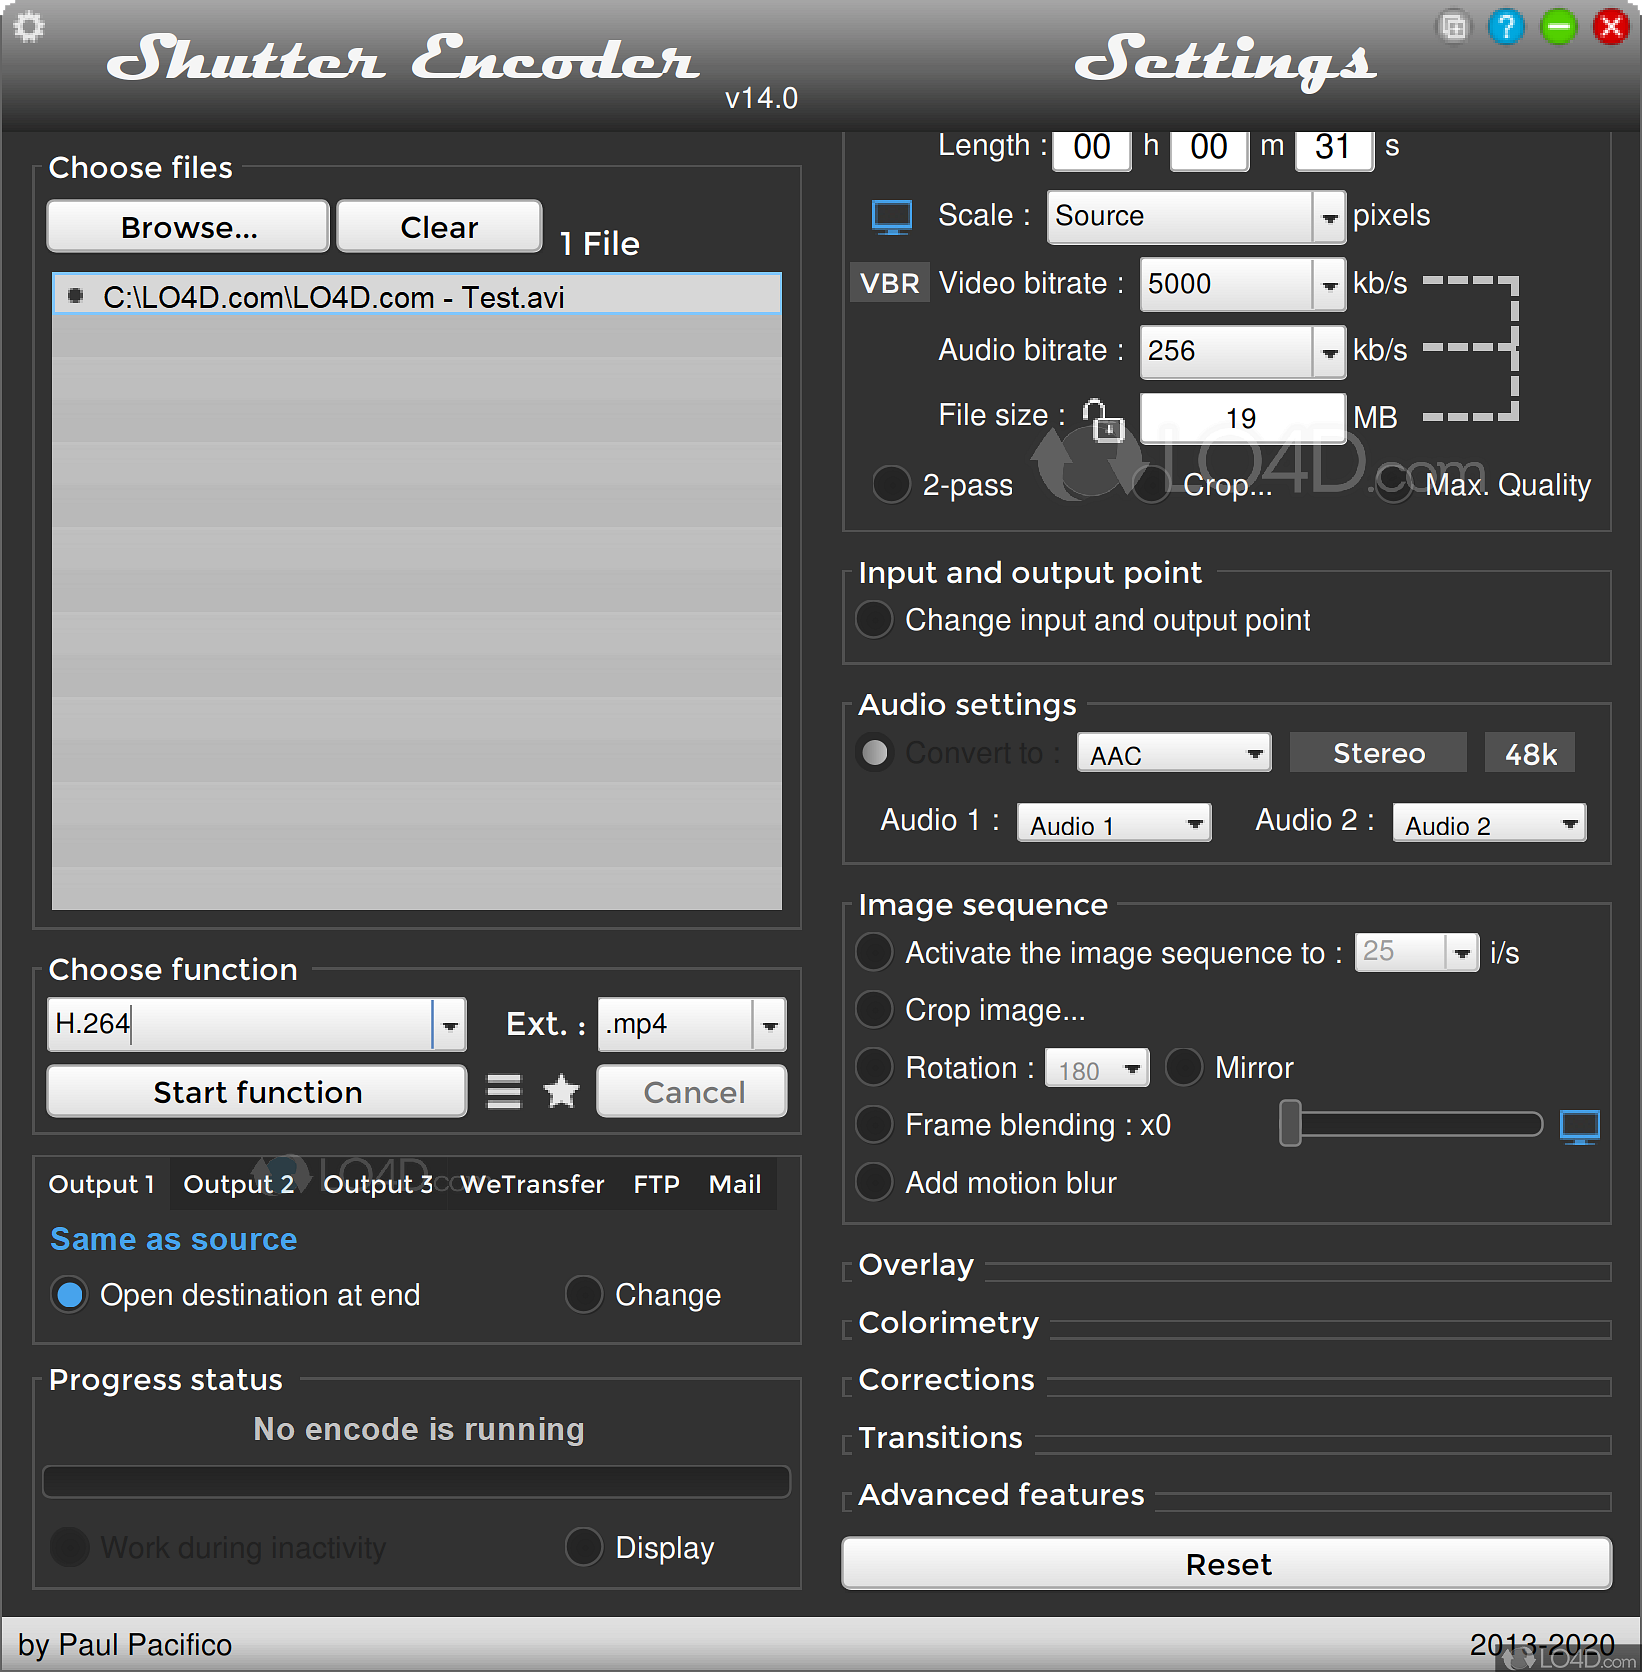 Shutter Encoder 17.4 for apple download free